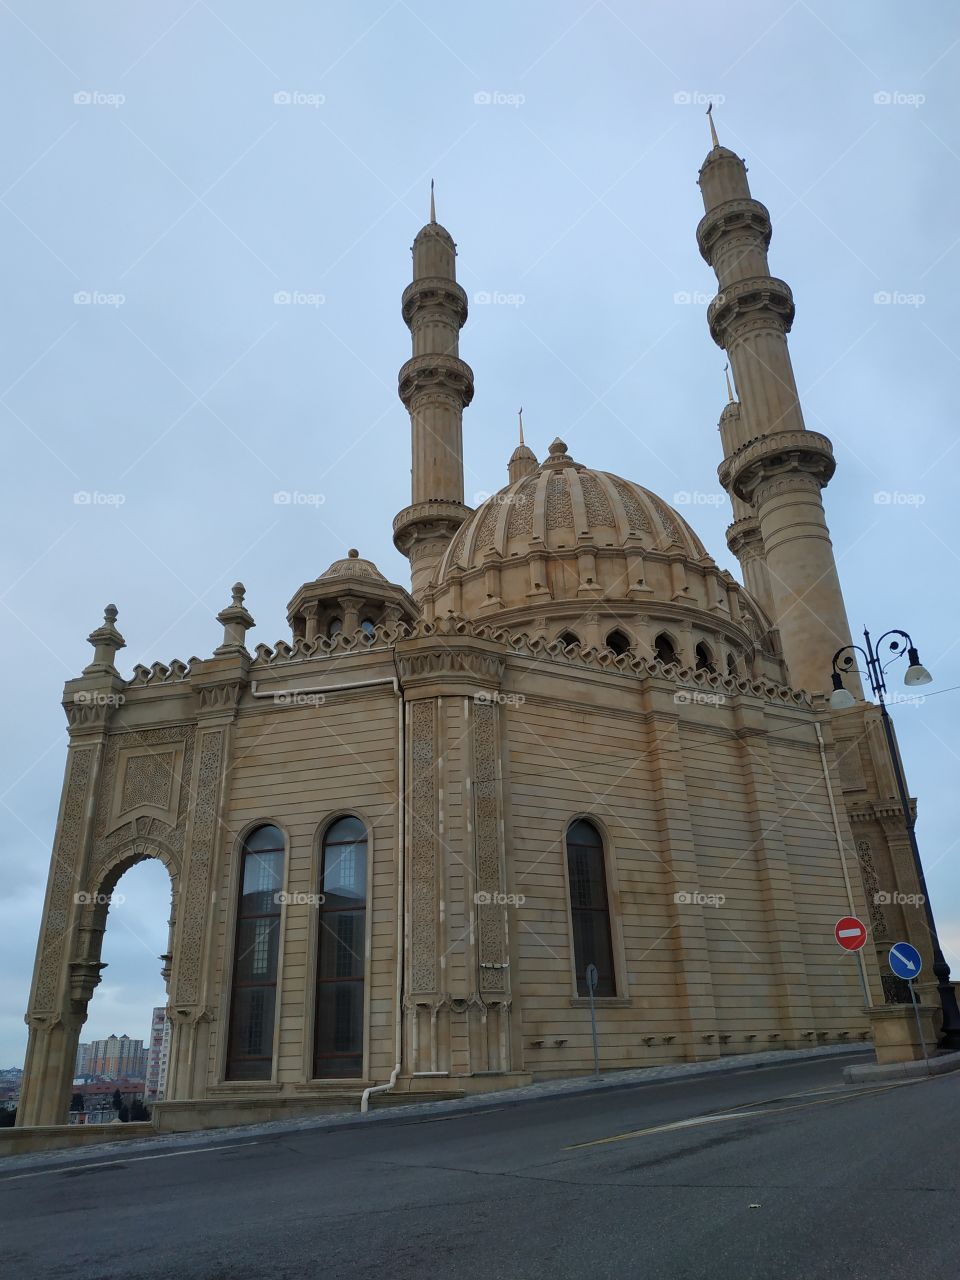 mosque, Heydar, Baku, Azerbaijan